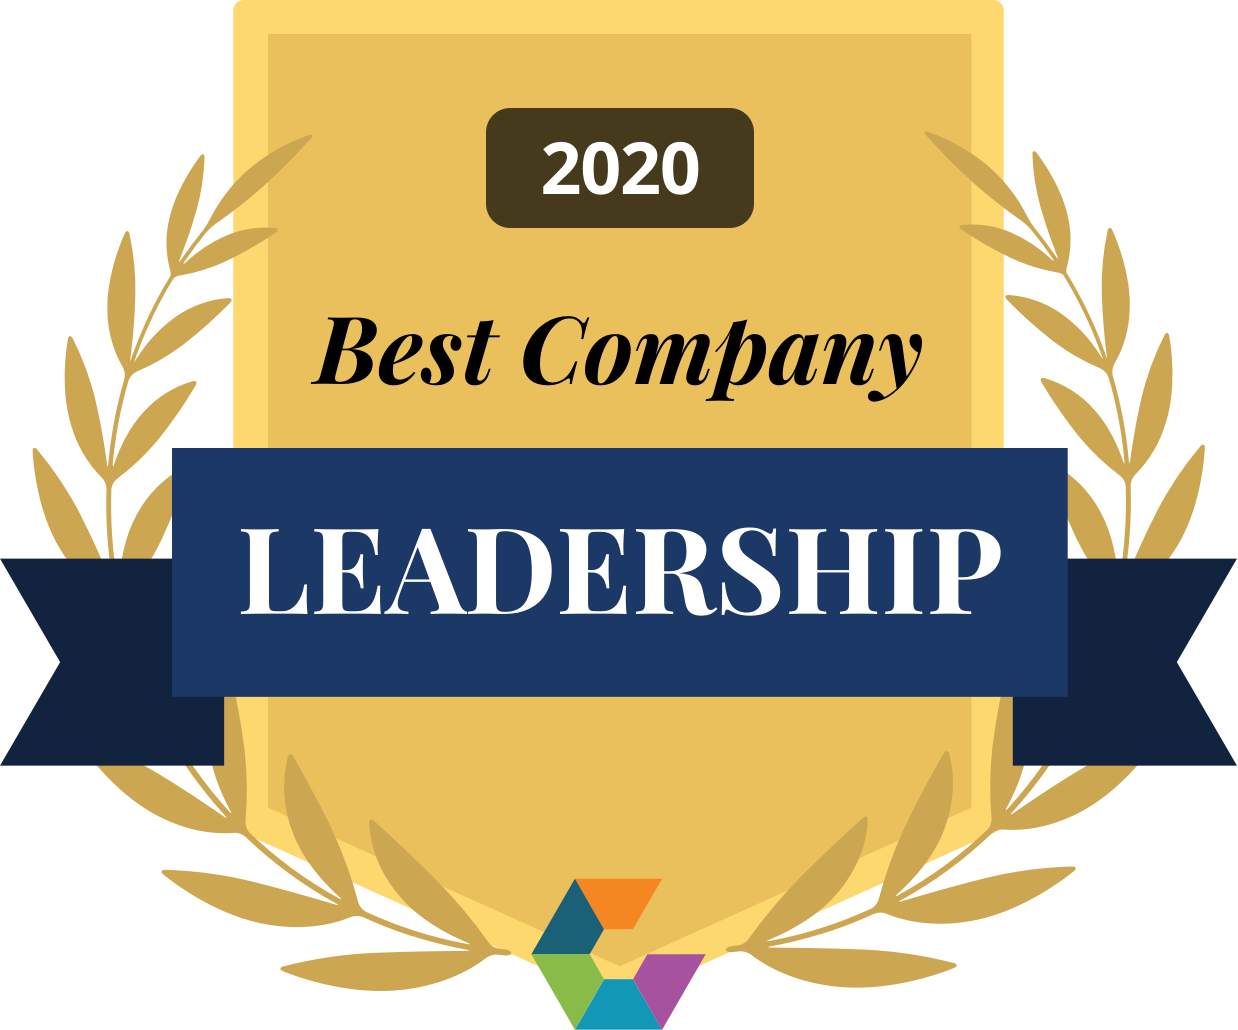 Best Company Leadership 2020